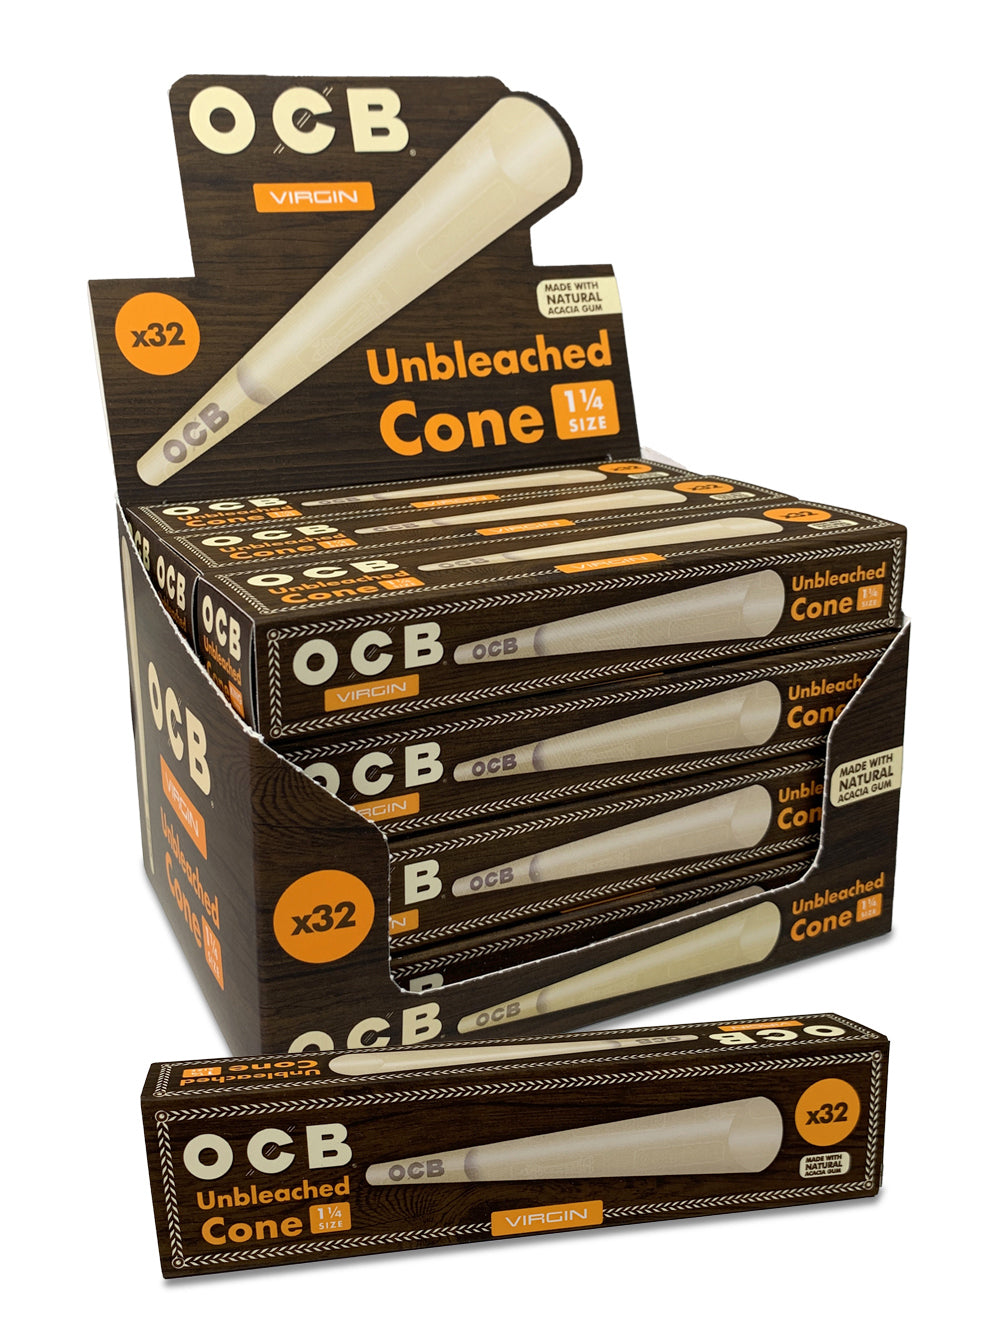 Unbleached 1¼ Cone, 32 Pack (Box)